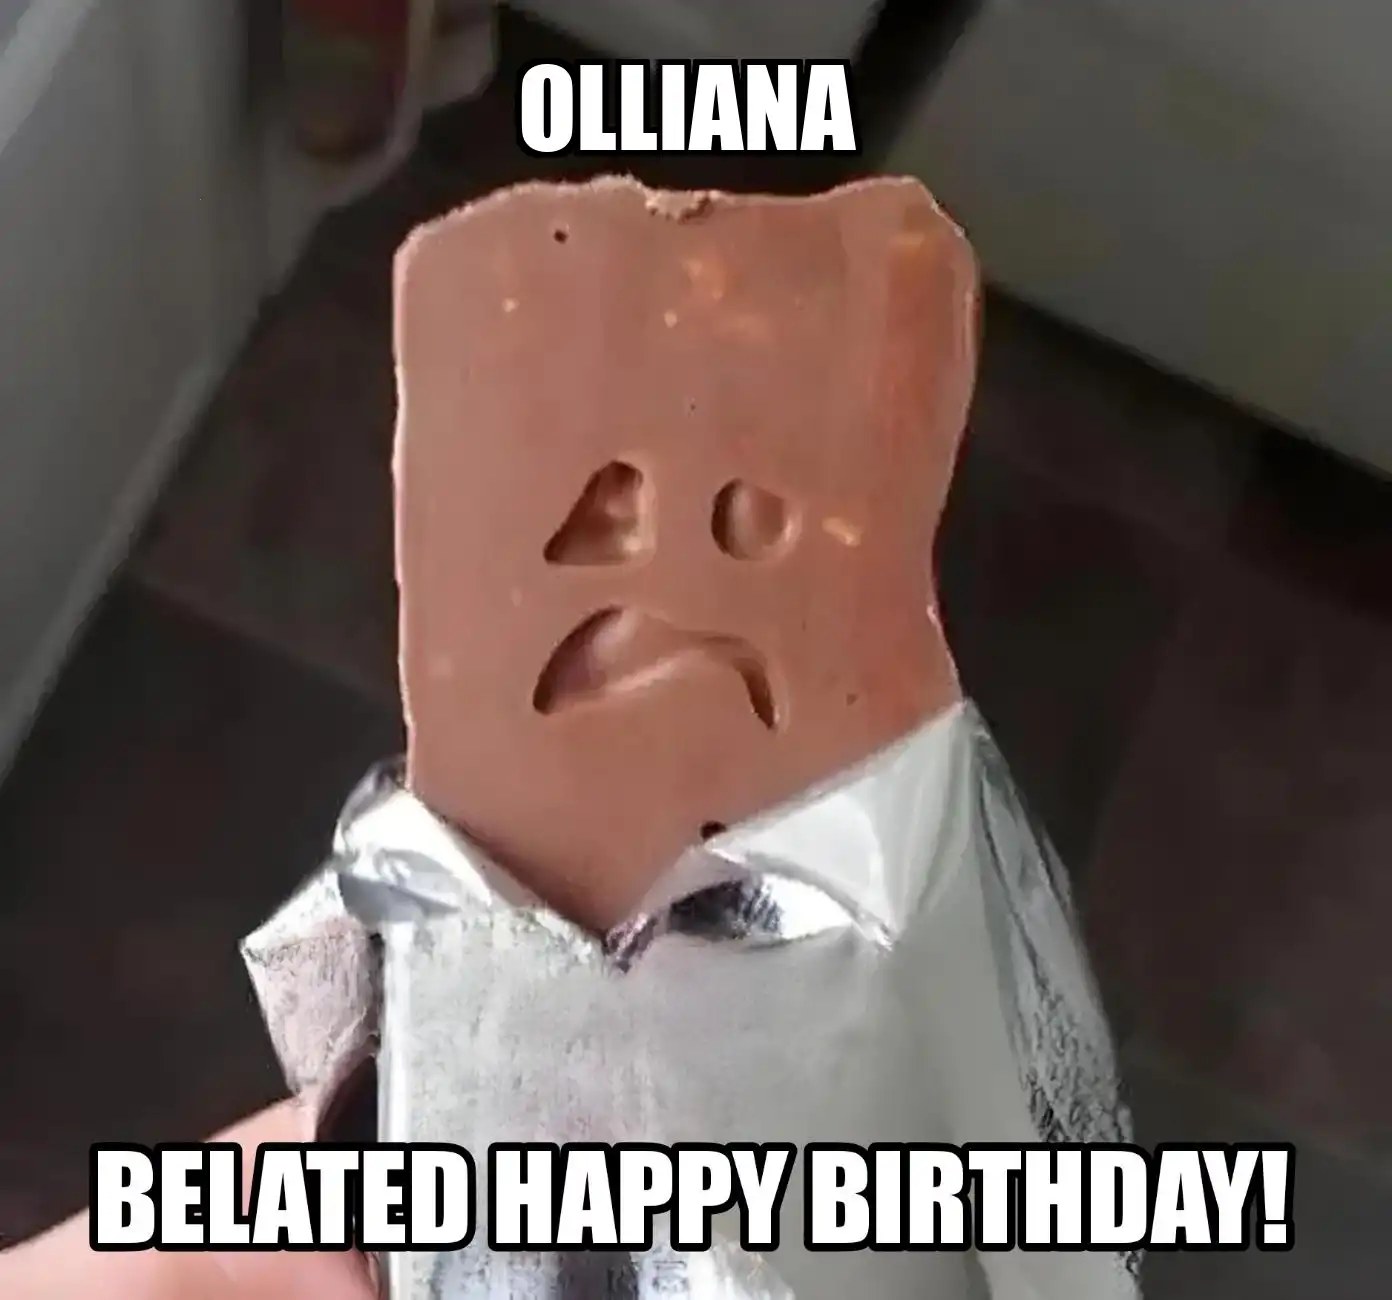 Happy Birthday Olliana Belated Happy Birthday Meme